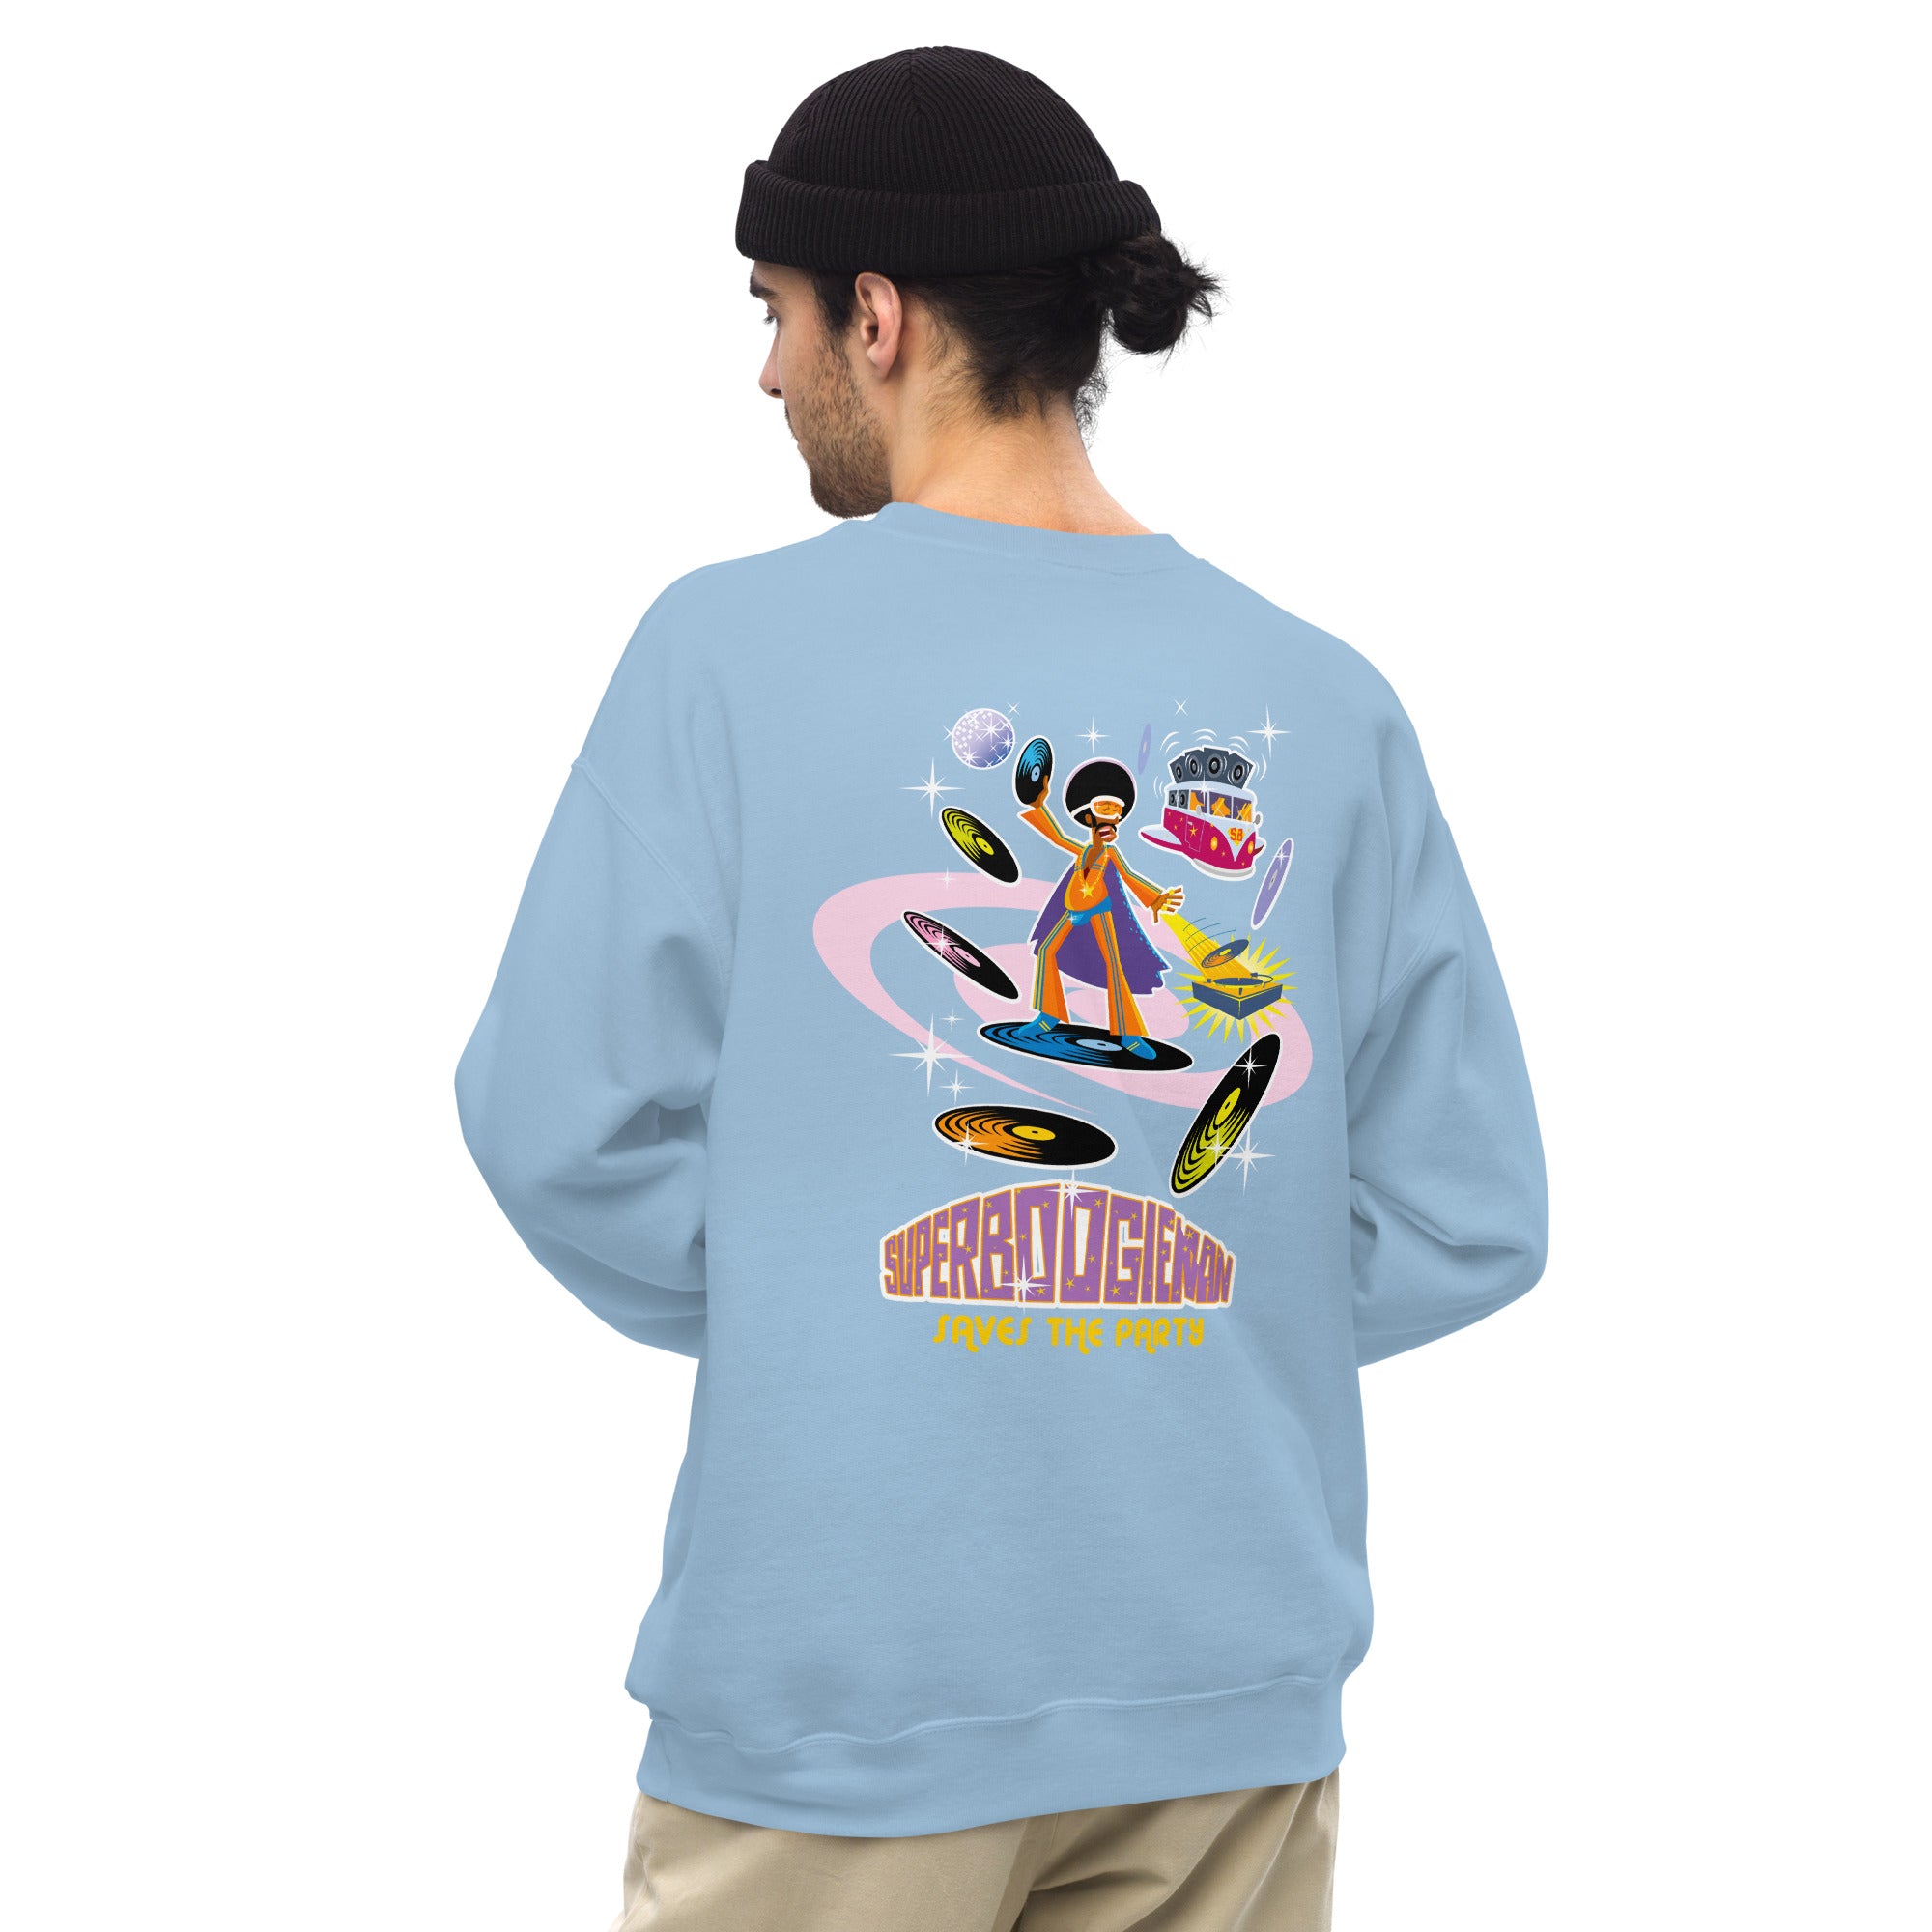 Unisex Sweatshirt Superboogieman on light colors (front & back)